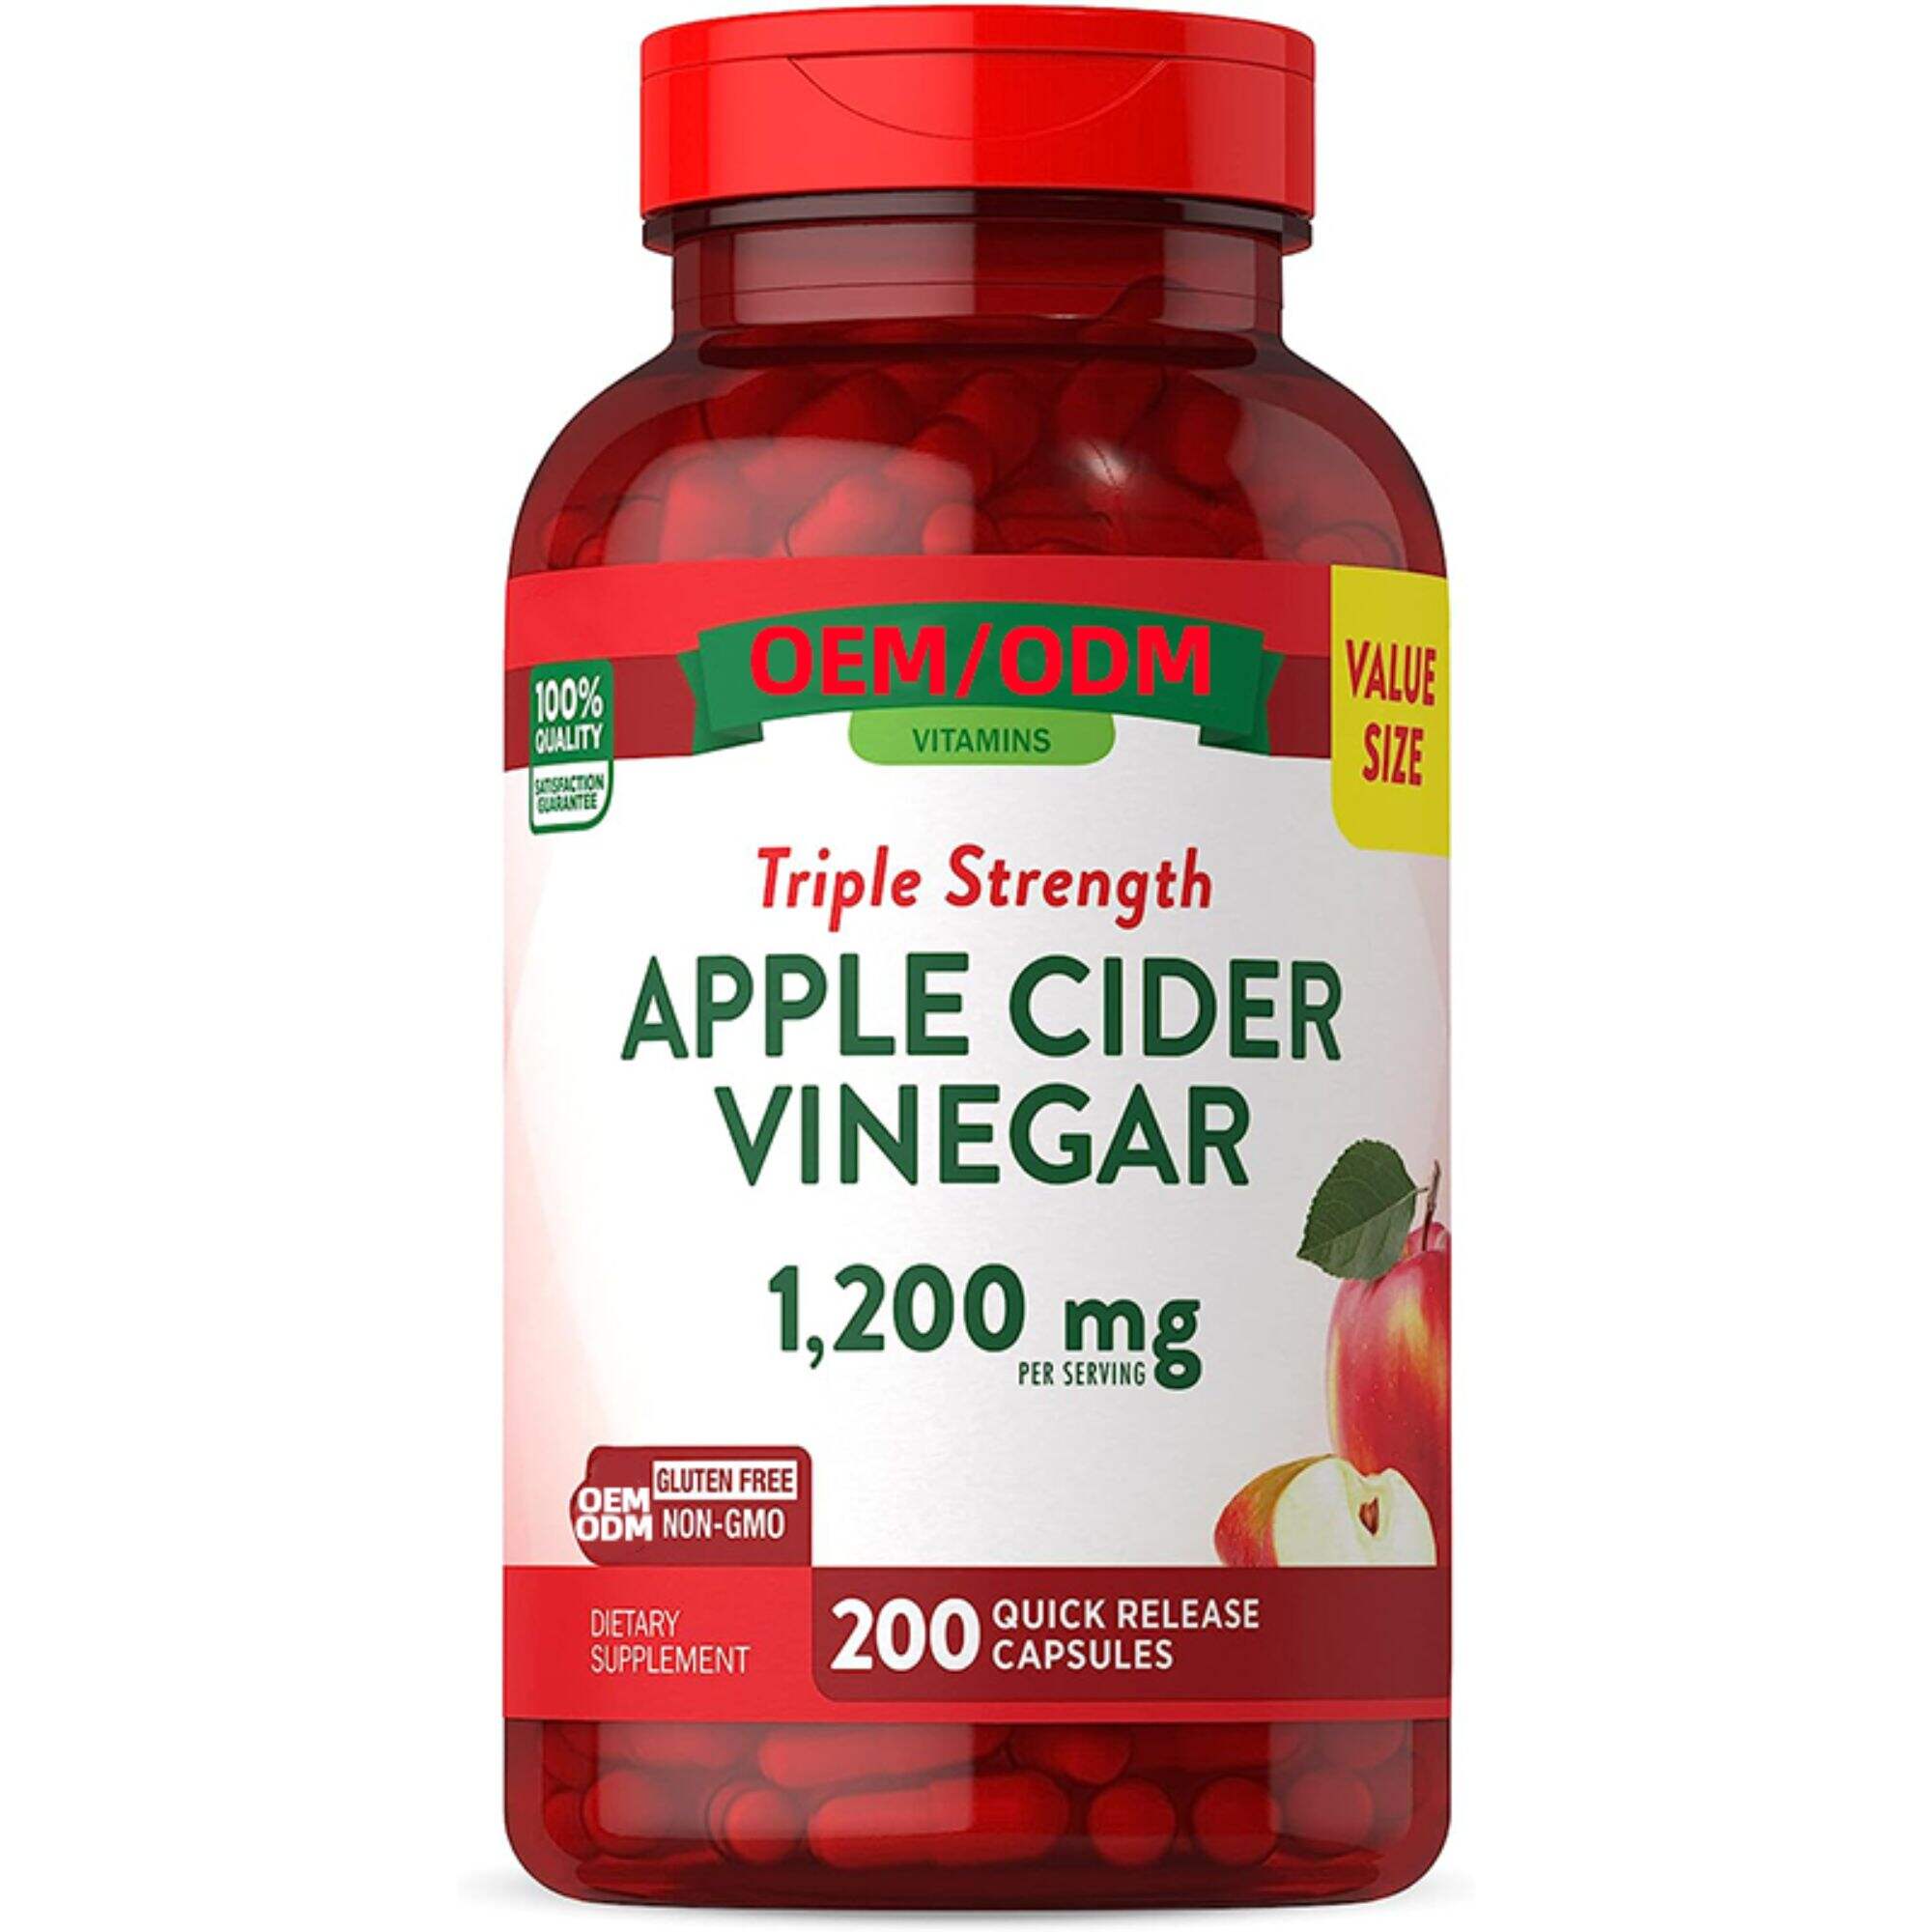 Apple Cider Vinegar Capsules 1200mg 200 Pills Extra Strength Value Size Non-GMO Gluten Free Supplement